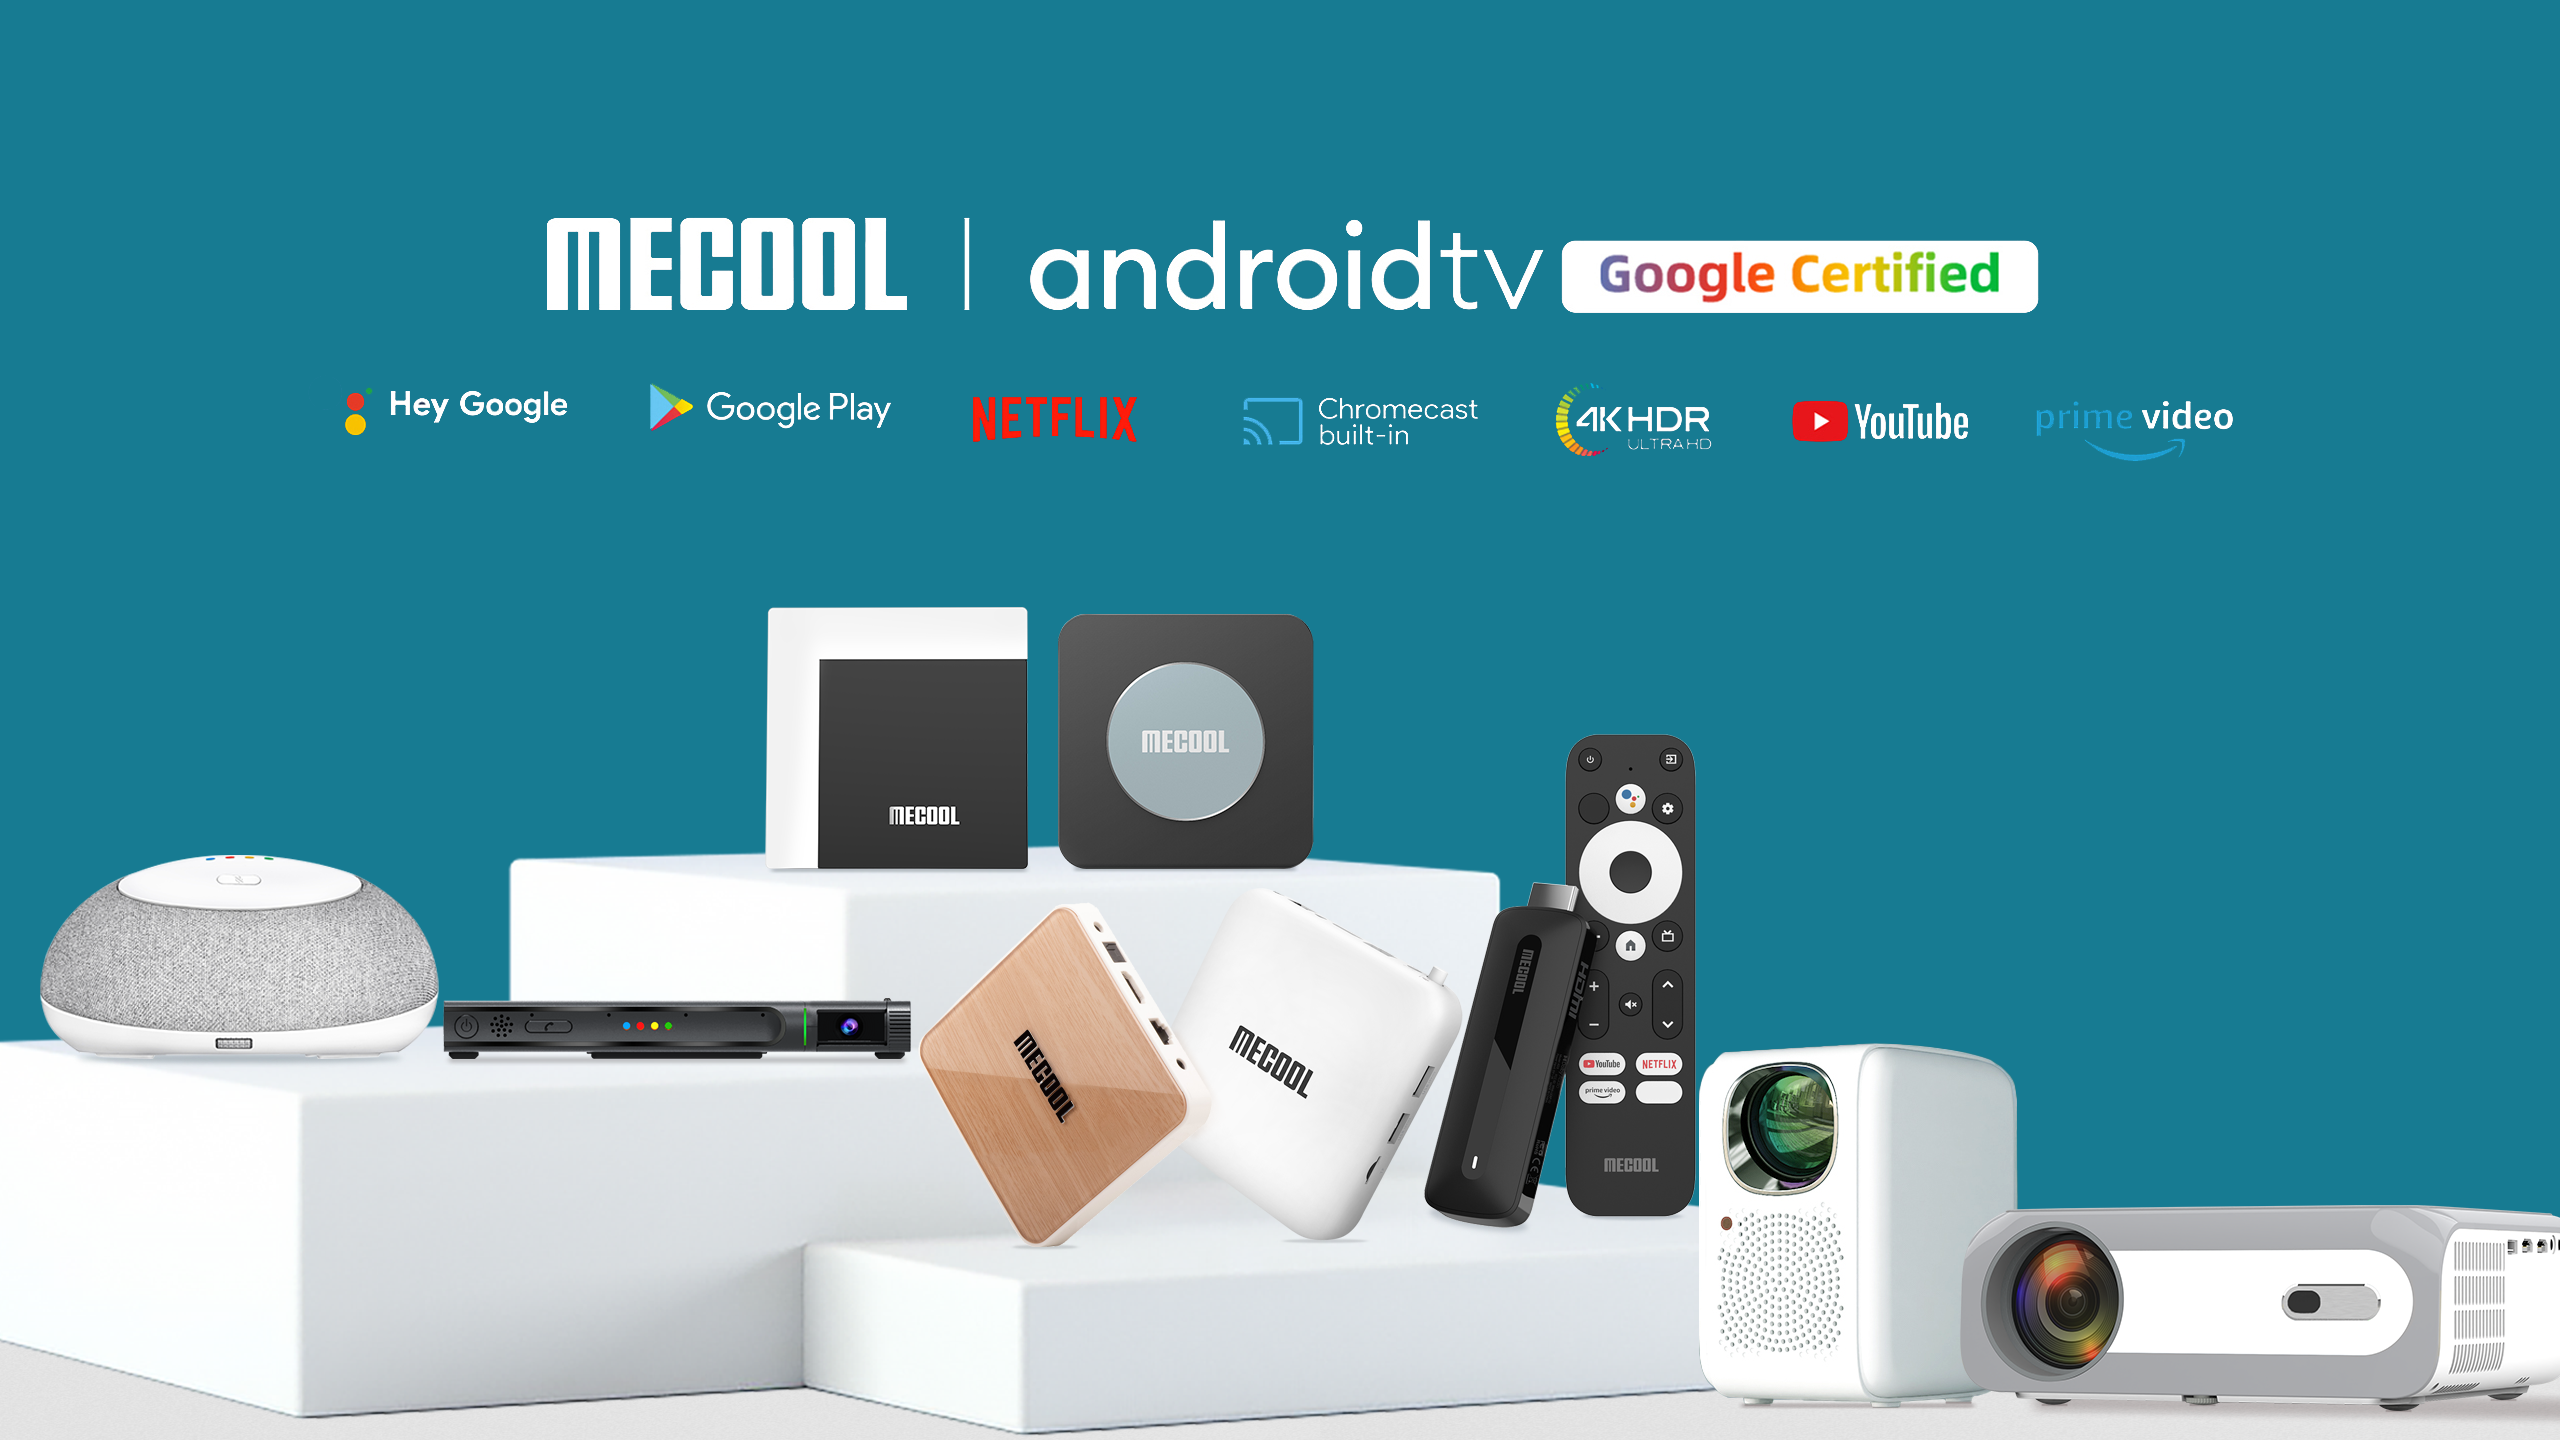 Android TV Box 11.0, MECOOL KM7 Plus Smart TV Box 4K Argentina